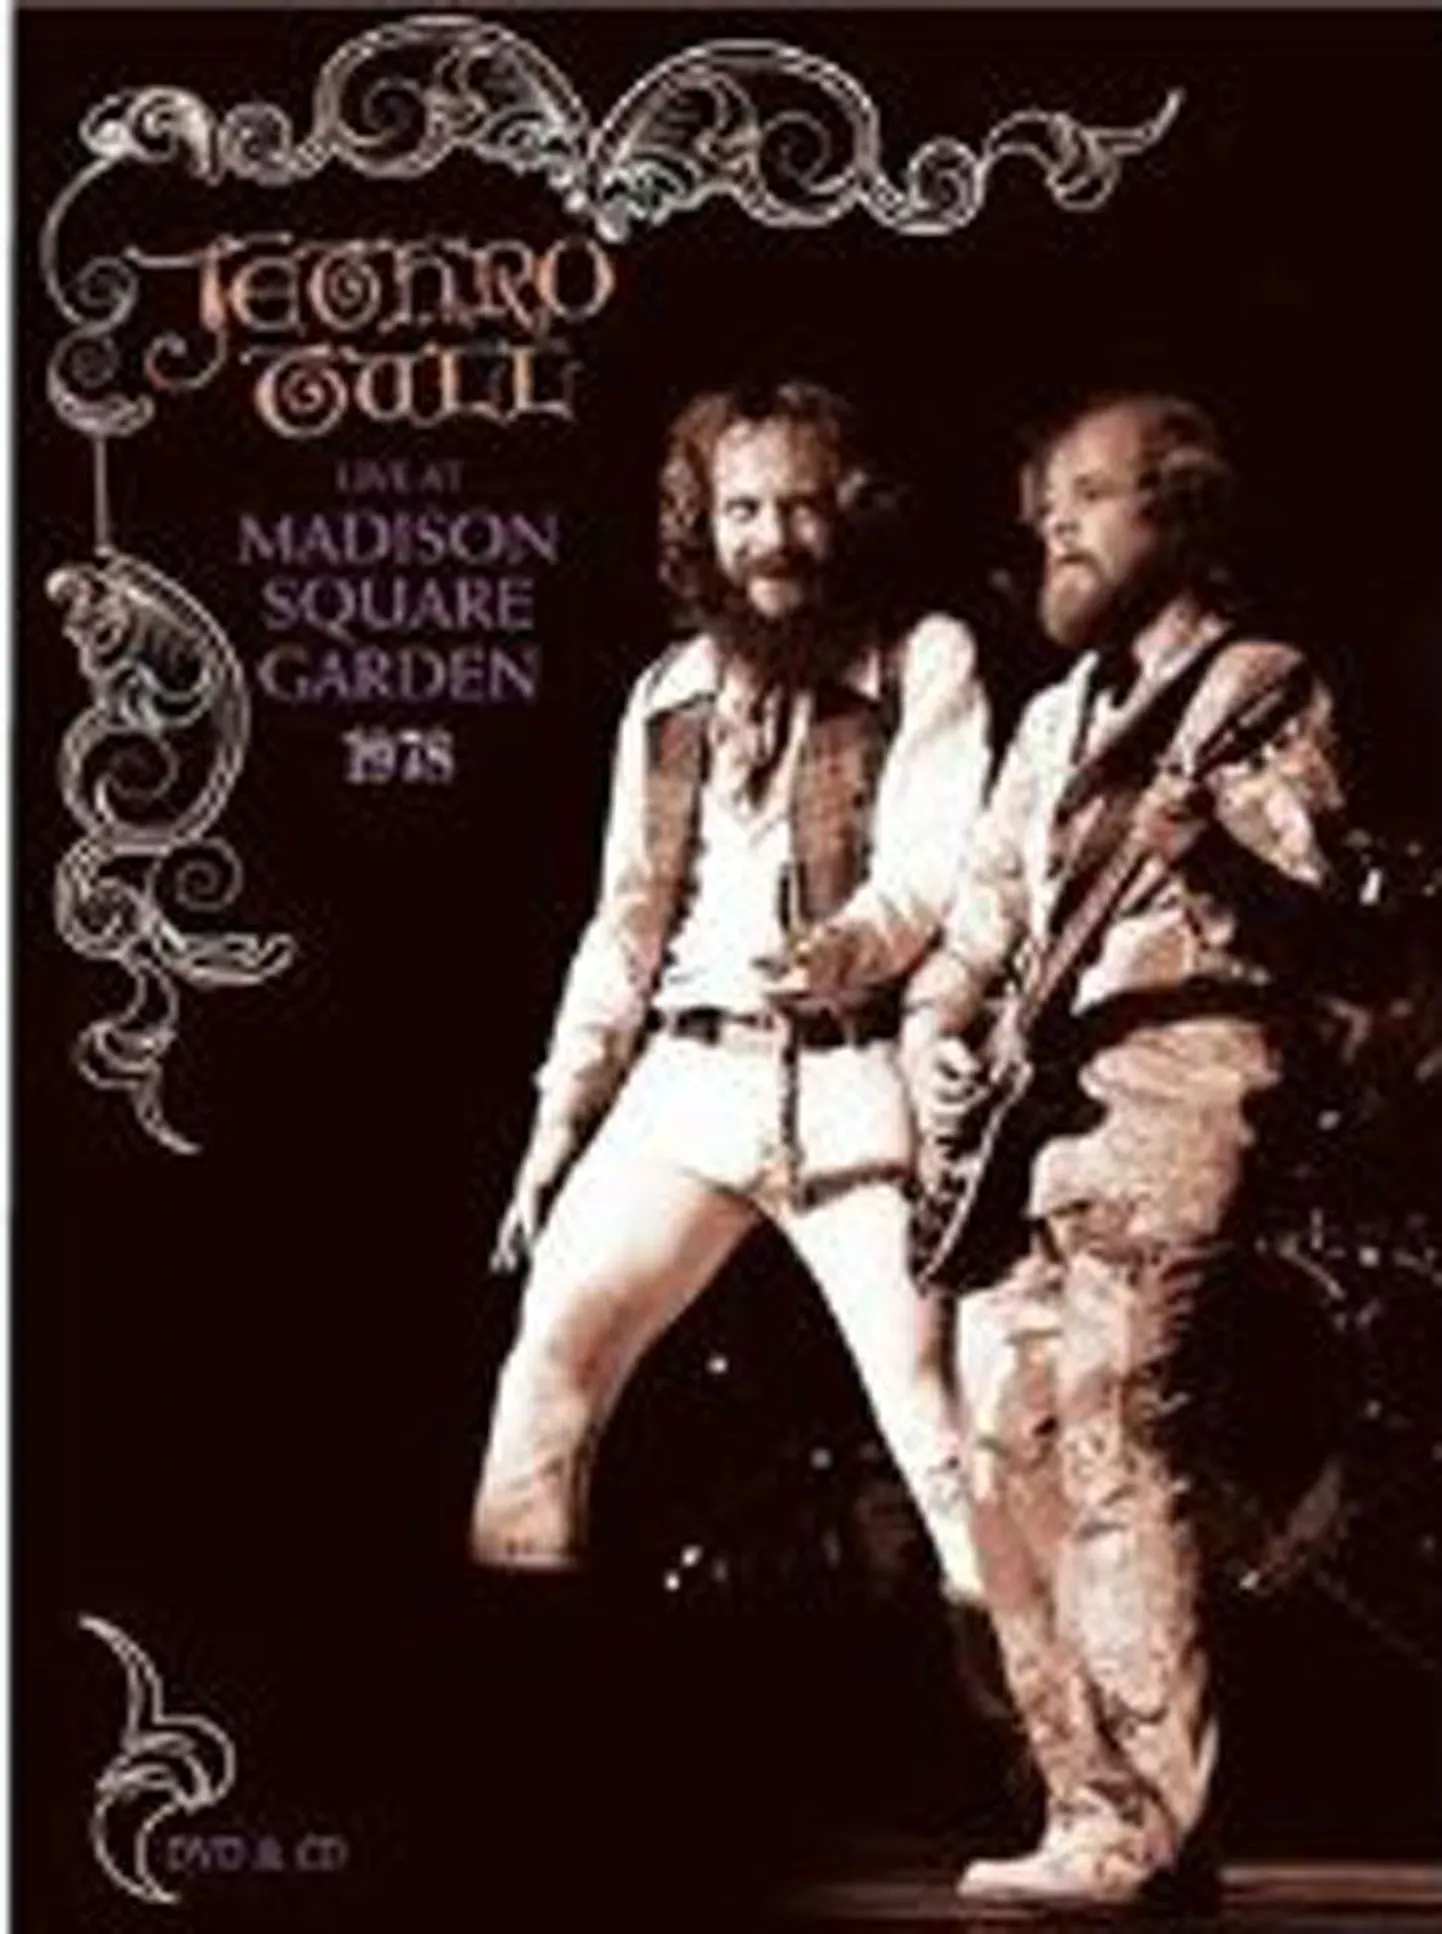 Jethro Tull
Live At Madison Square Garden 1978 (EMI)